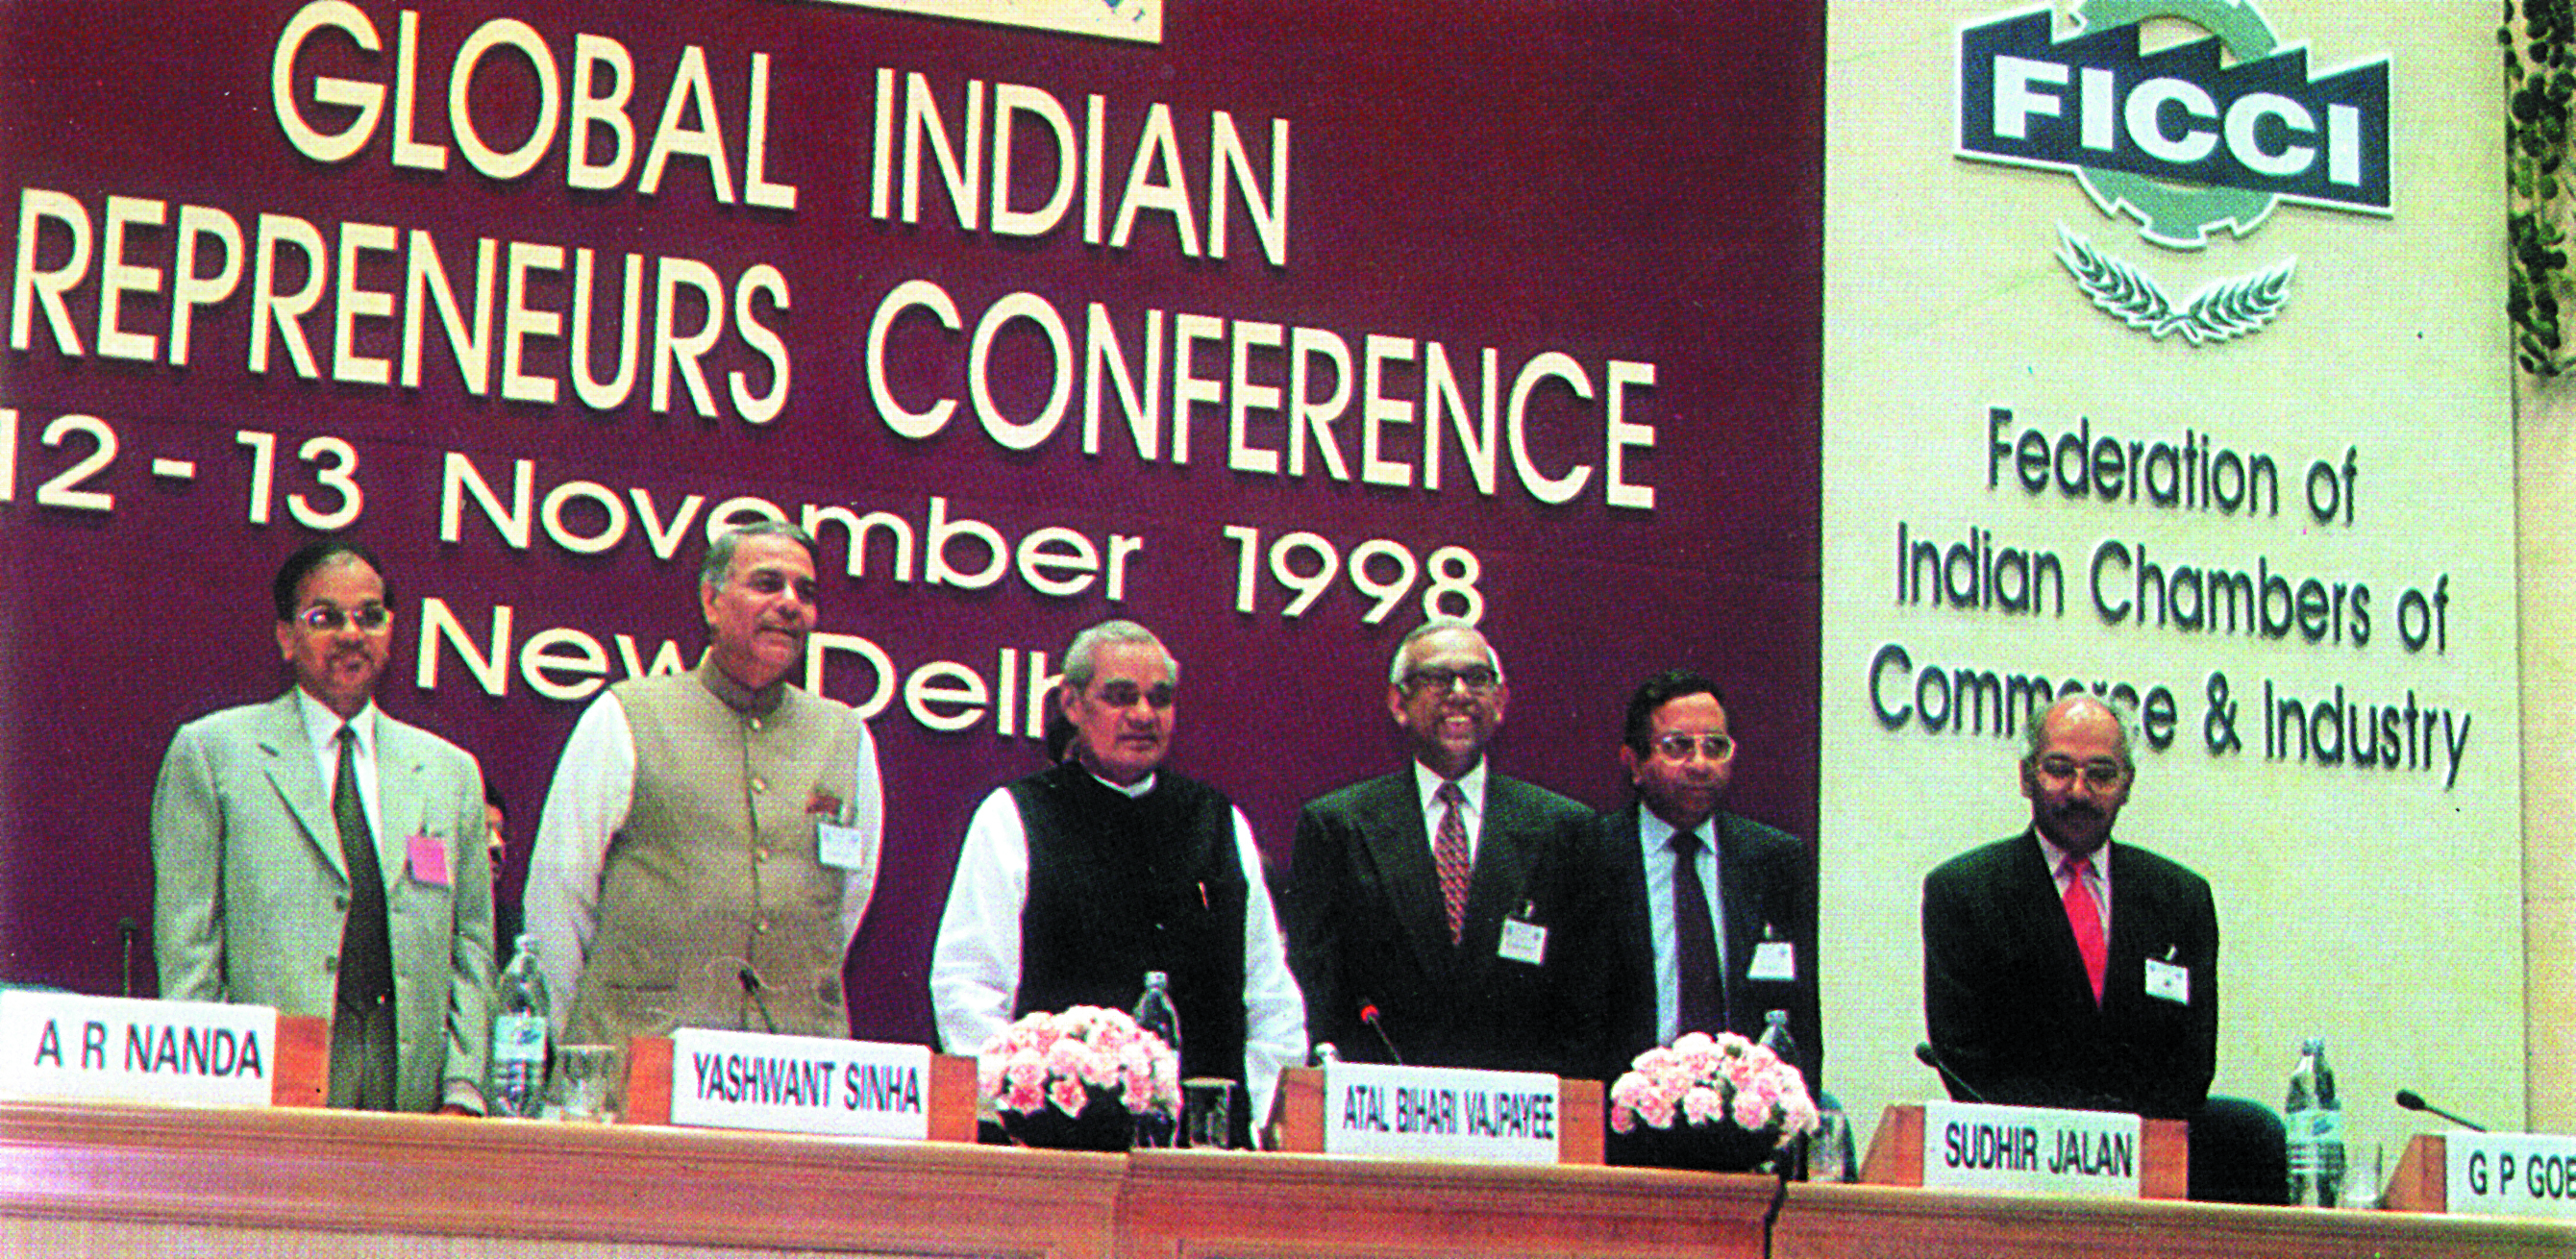 Prime Minister of India, Shri Atal Bihari Vajpayee, at the Global Entrepreneurs Conference organized by FICCI. The second from left are Shri Yashwant Sinha, Finance Minister, Shri Atal Bihari Vajpayee, Shri Sudhir Jalan and Shri G. P. Goenka